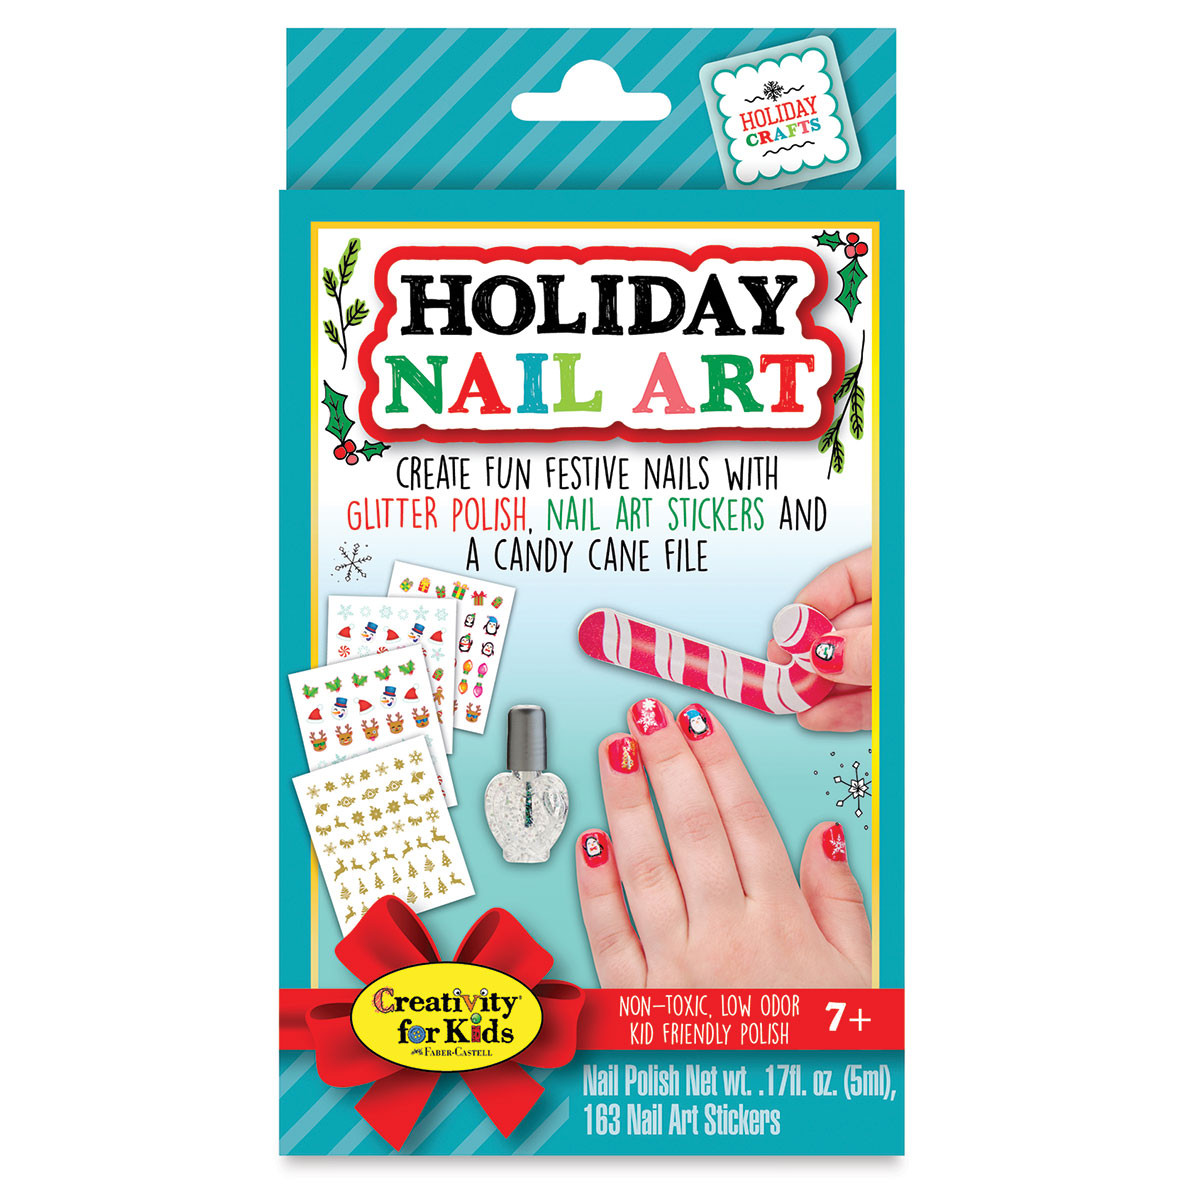 Nail Art Kit For Kids
 Faber Castell Creativity for Kids Holiday Nail Art Mini